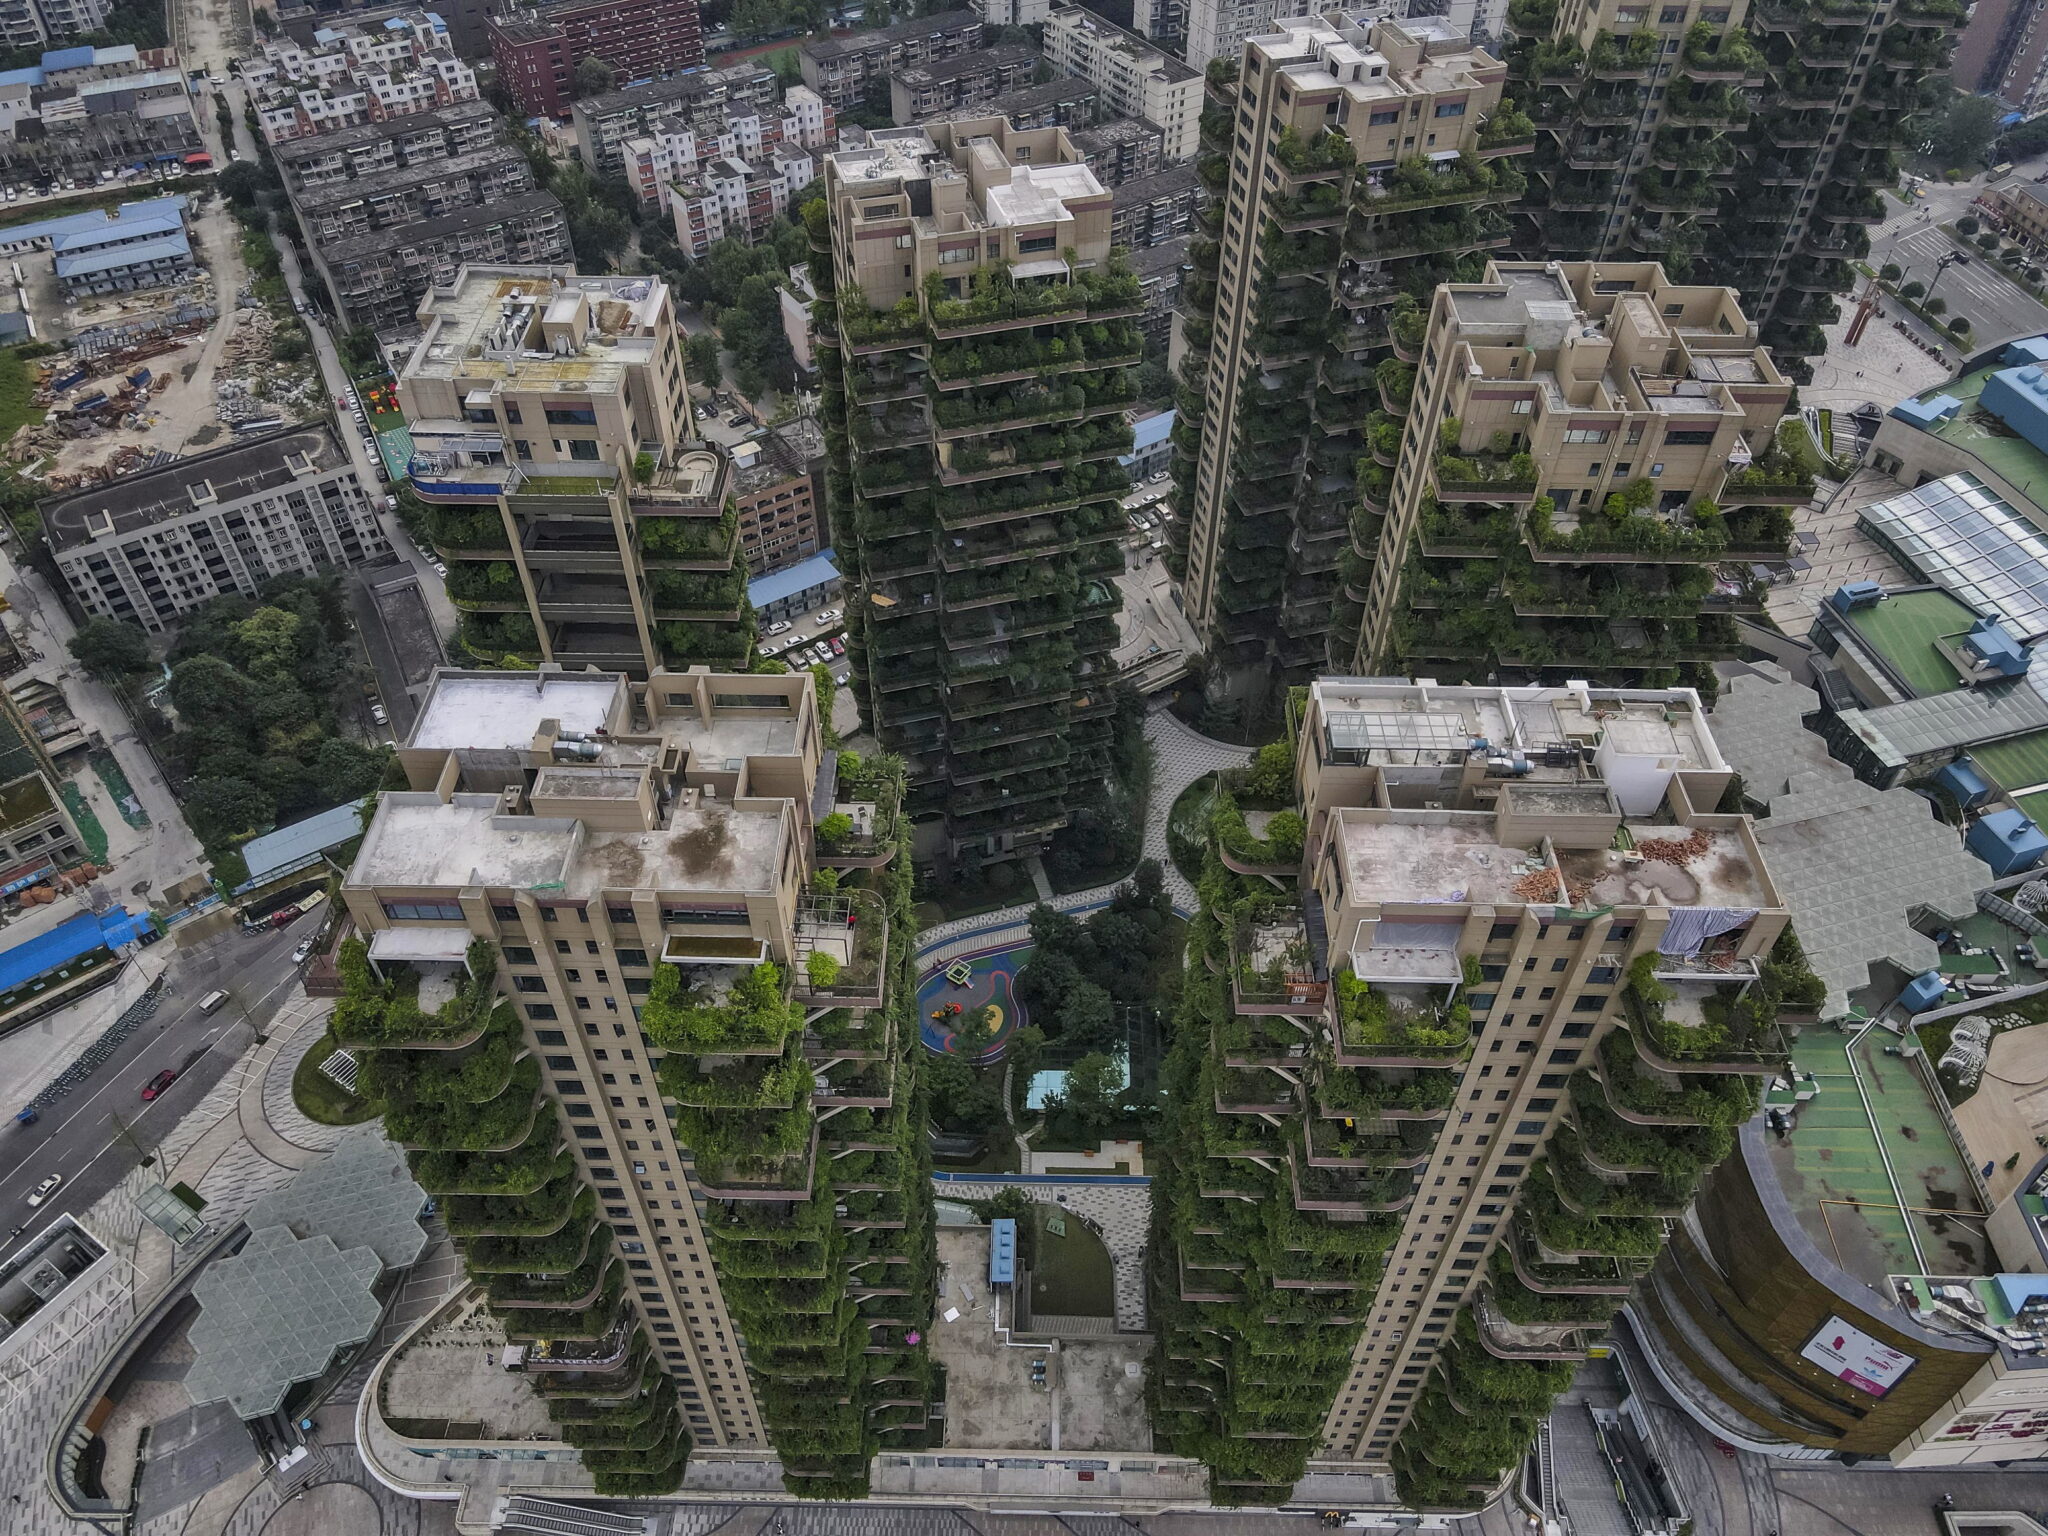 Plants overrun apartment blocks in Chengdu